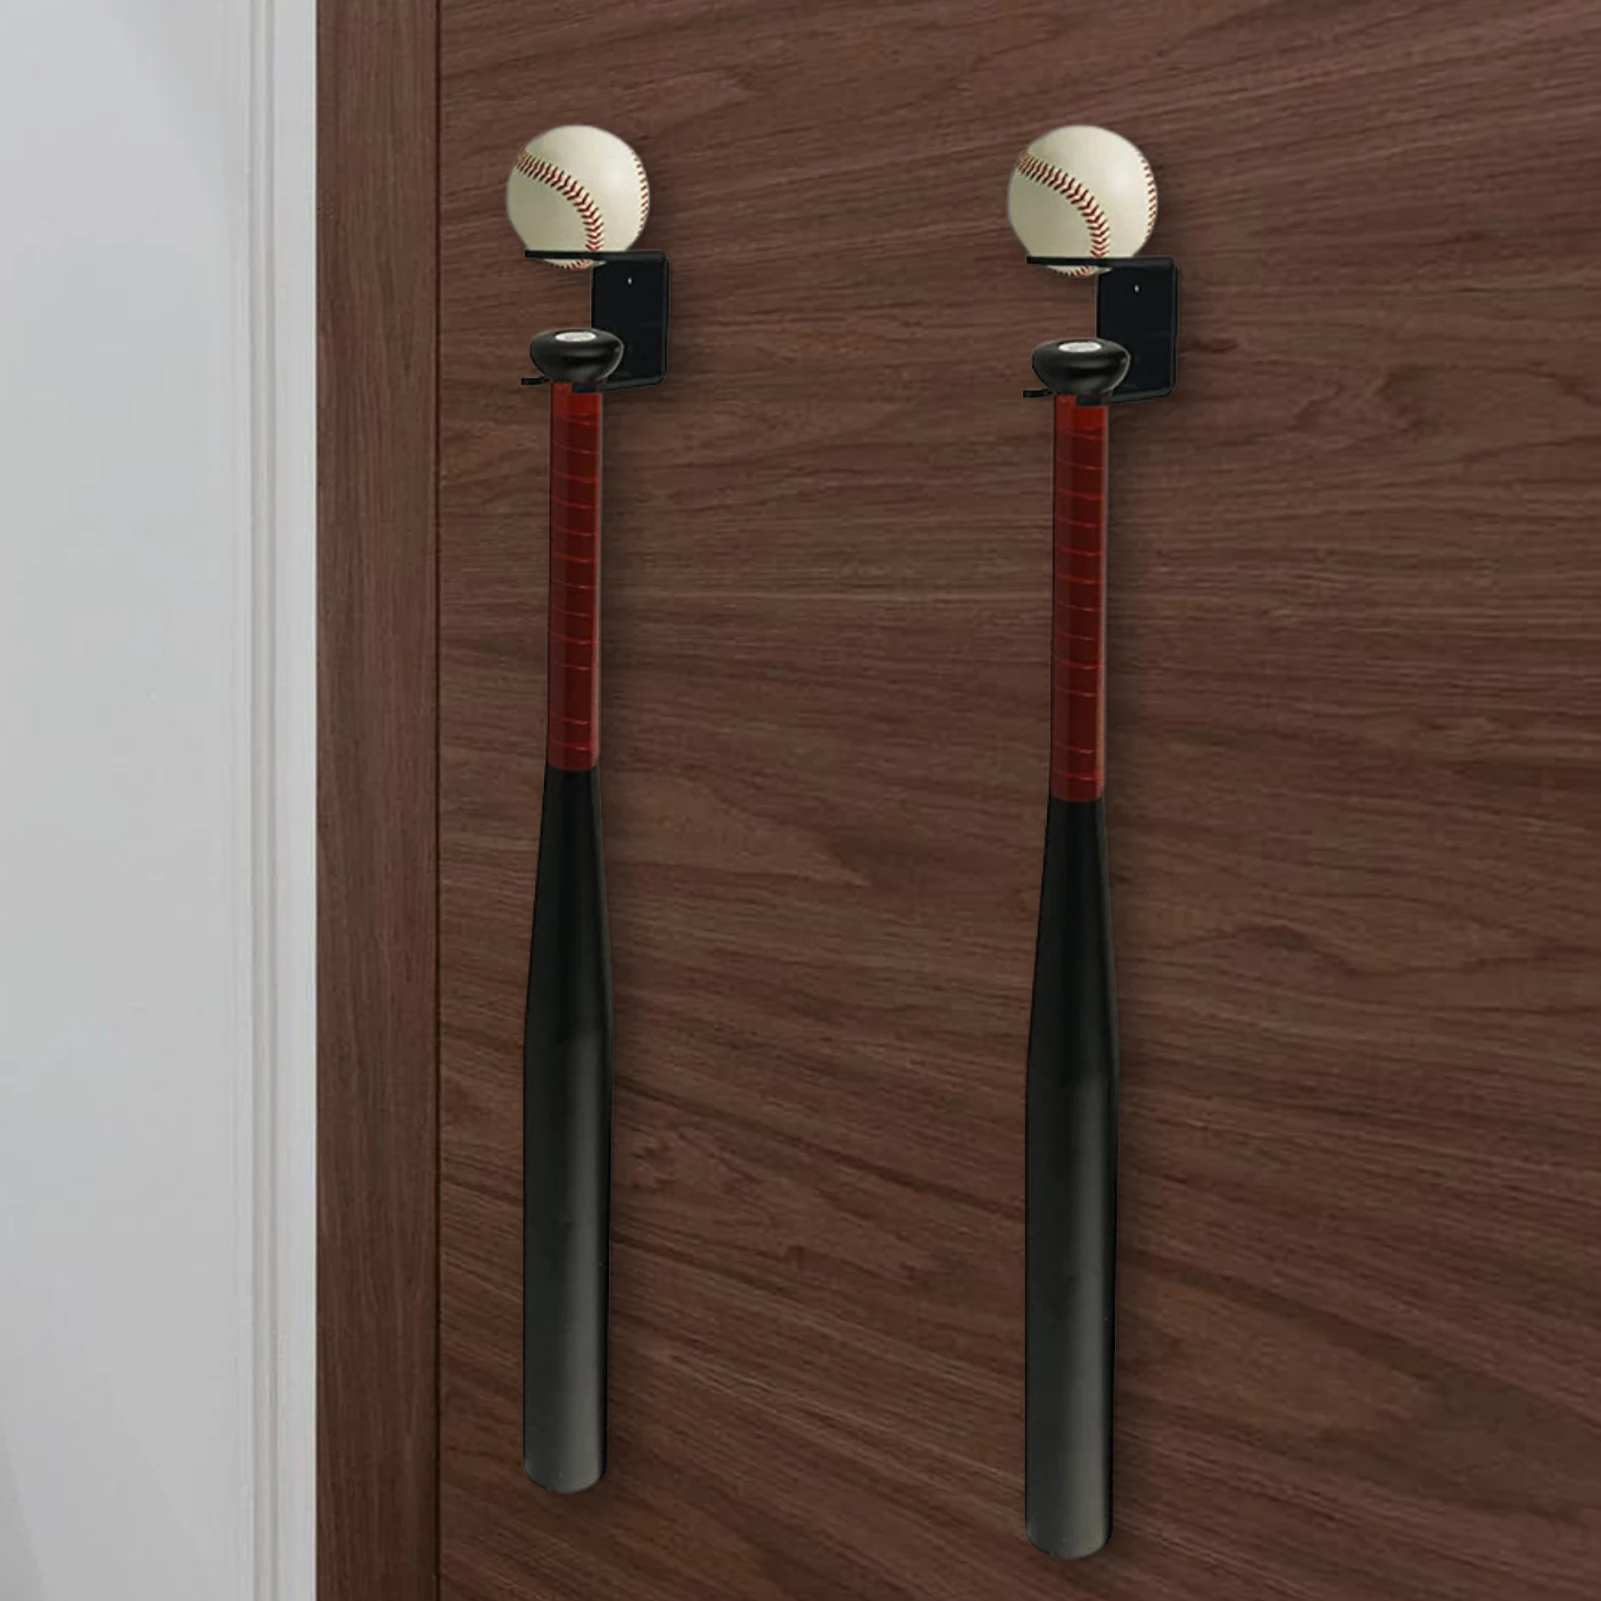 

Wall Mount Bat Rack Baseball Bat And Ball Display 2pcs Acrylic Display Rack For Memorabilia And Collectible